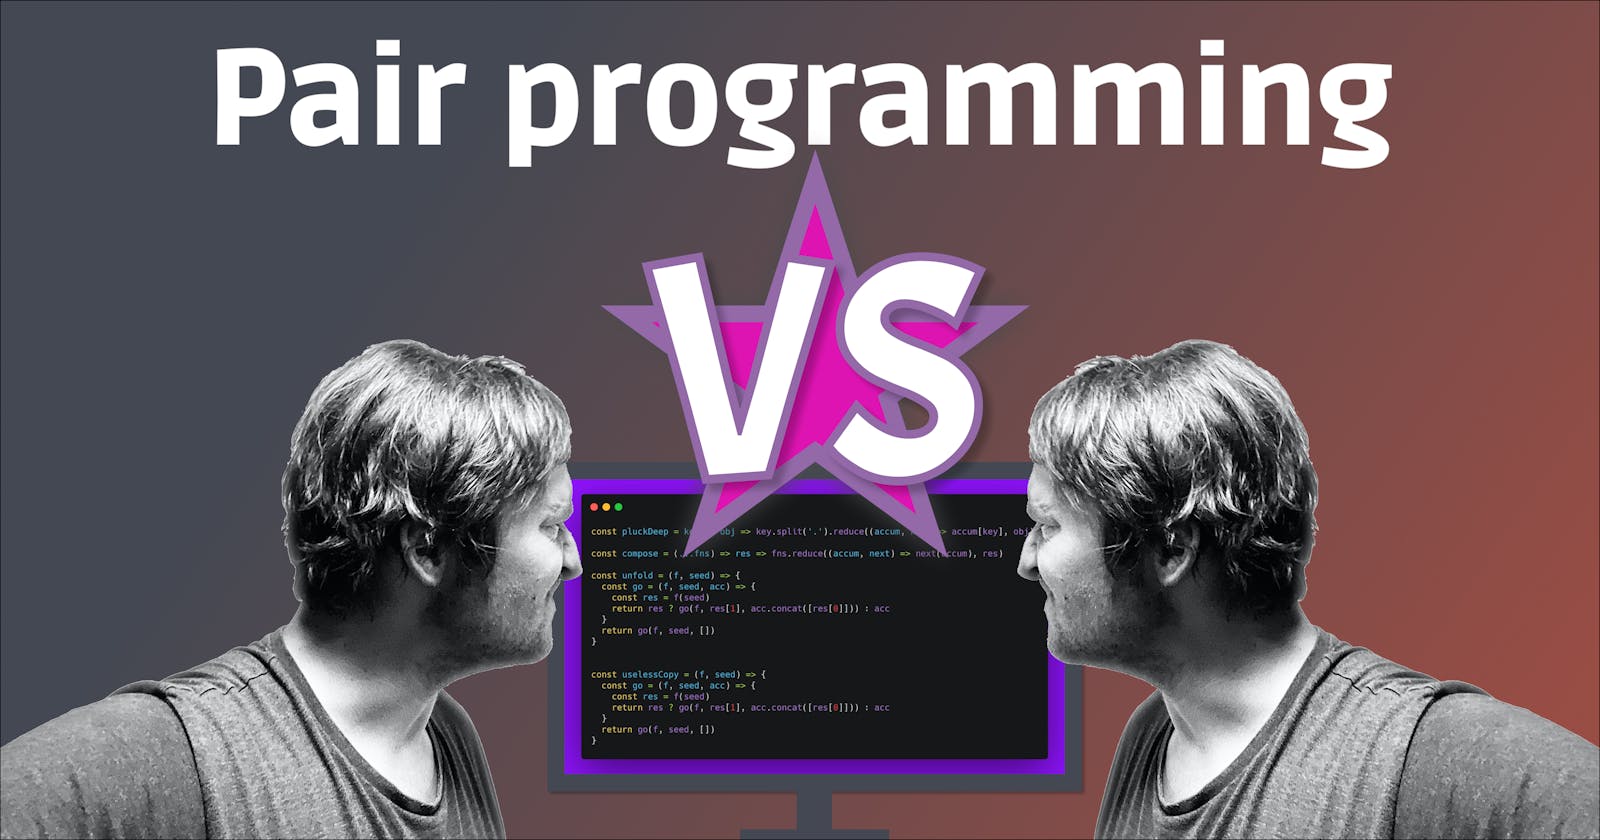 Pair programming